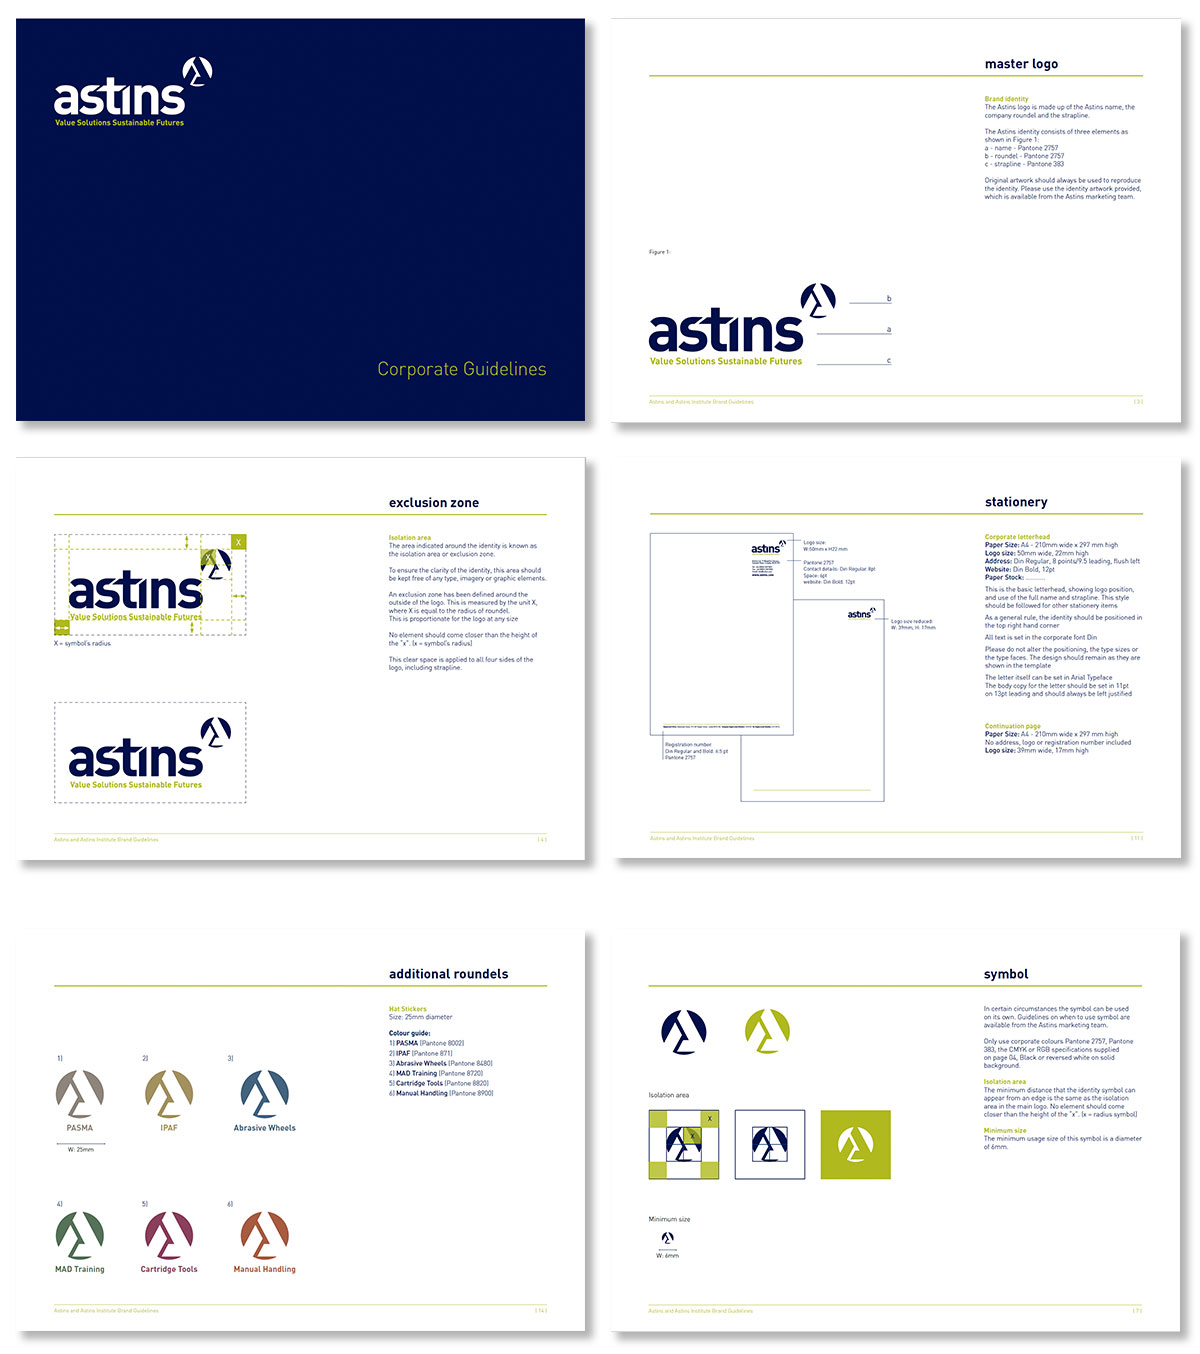 Astins-guides